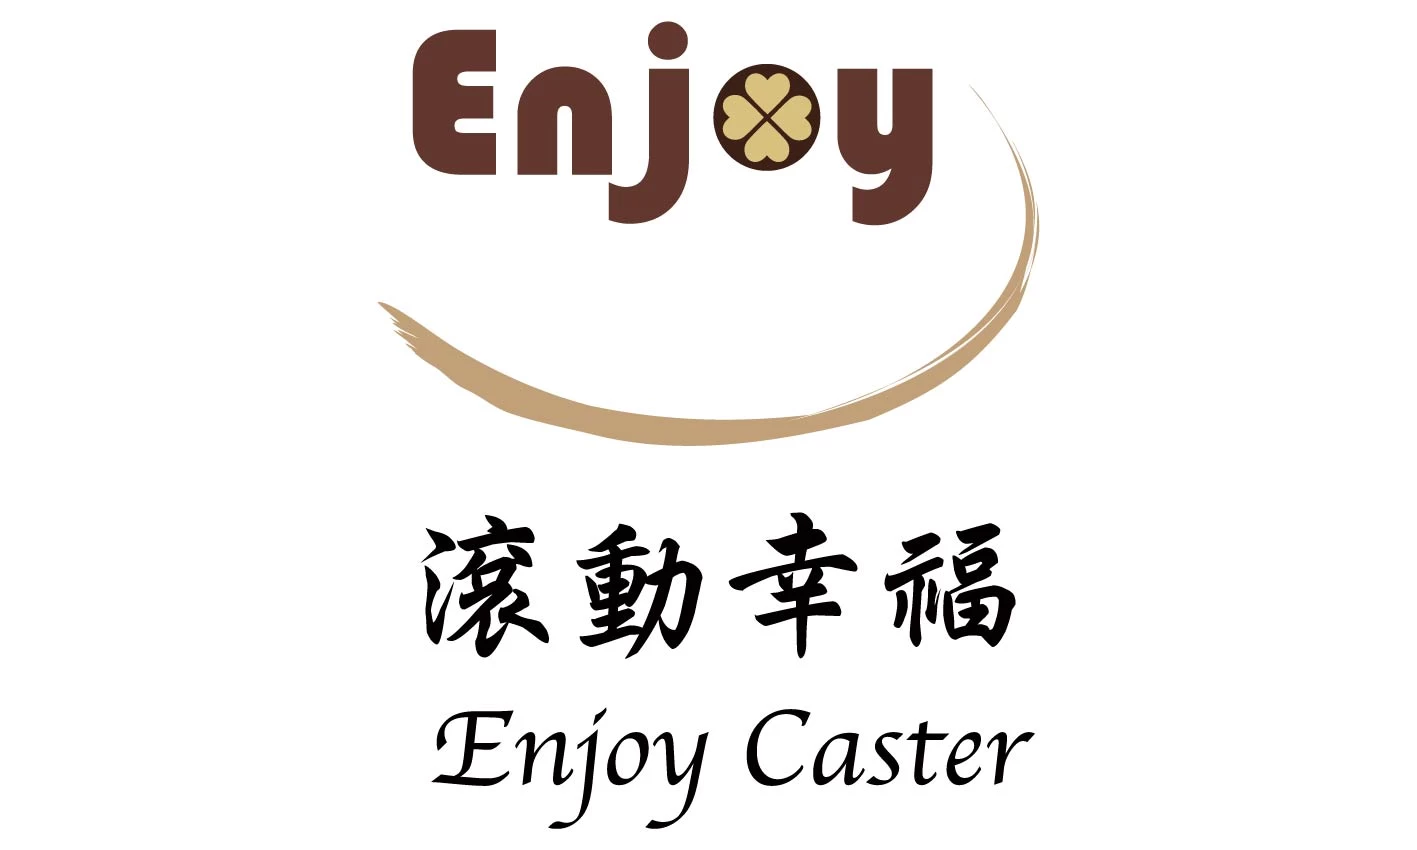 enjoycaster logo